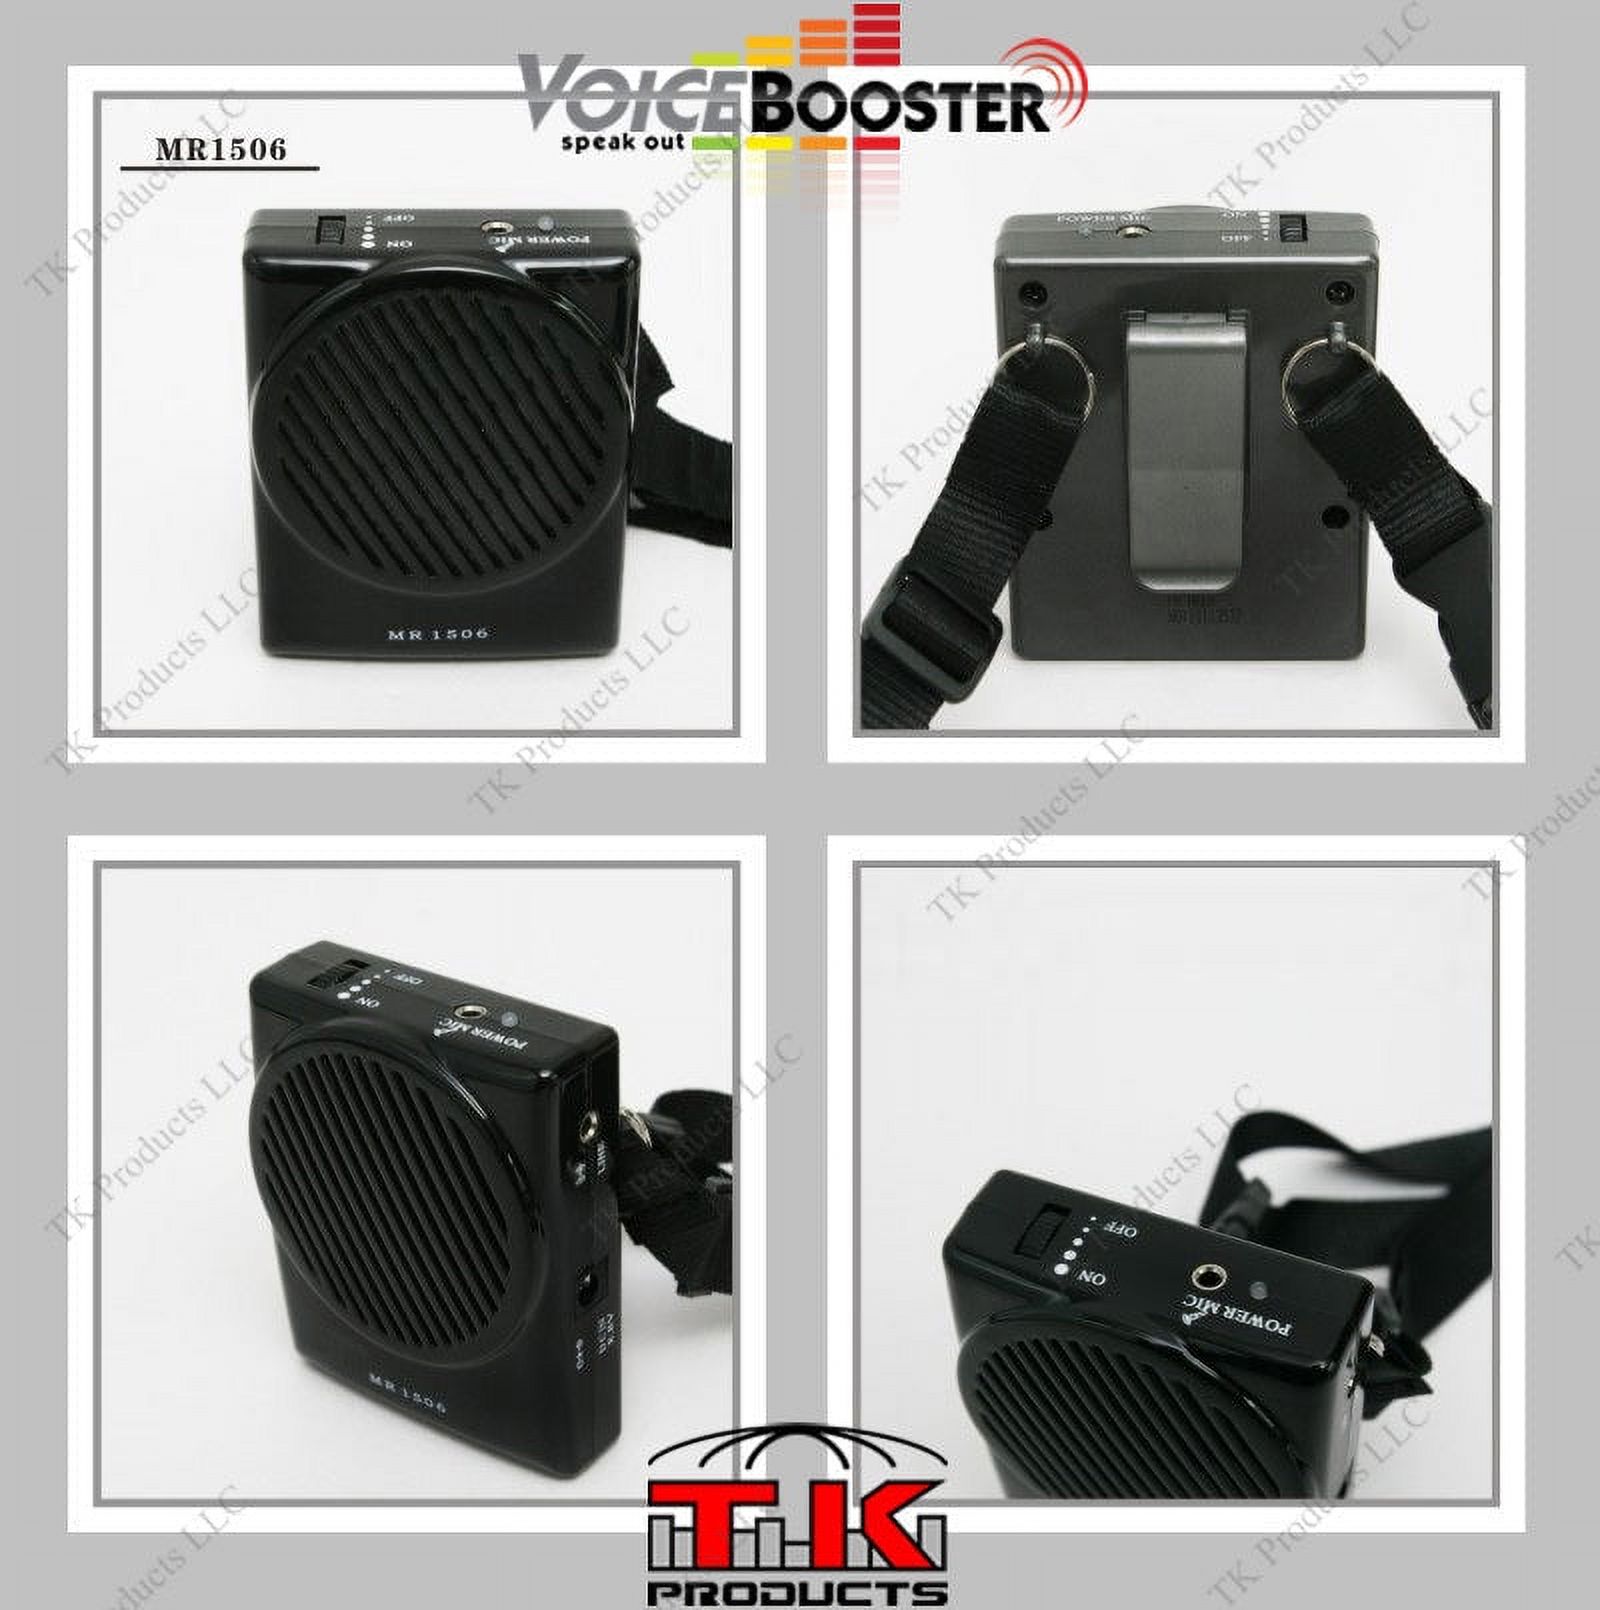 VoiceBooster MR1506 10watt Voice Amplifier - image 2 of 6